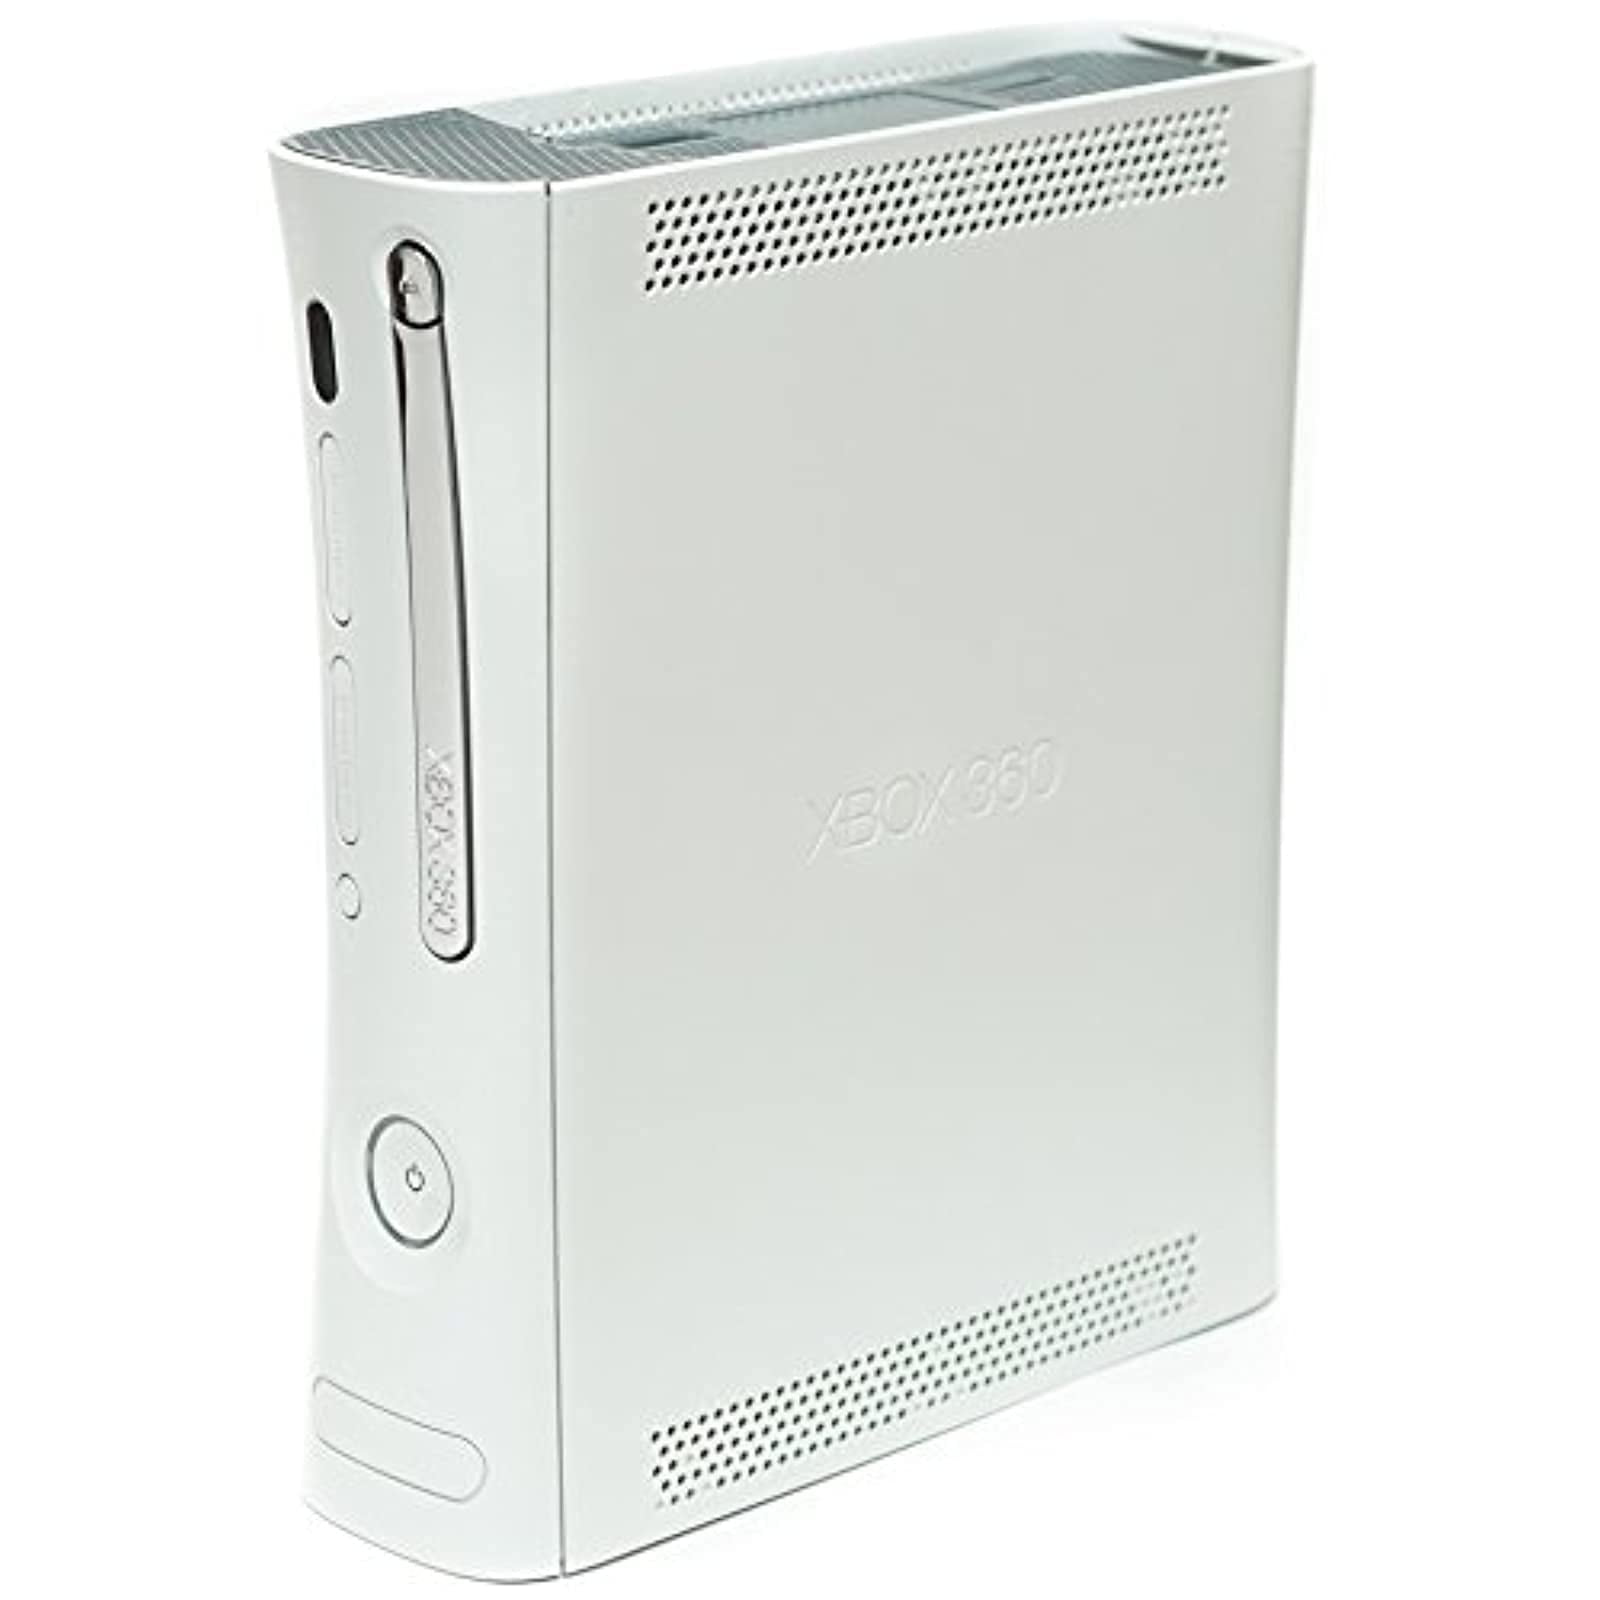 Microsoft Xbox 360 Faceplate In White Fat